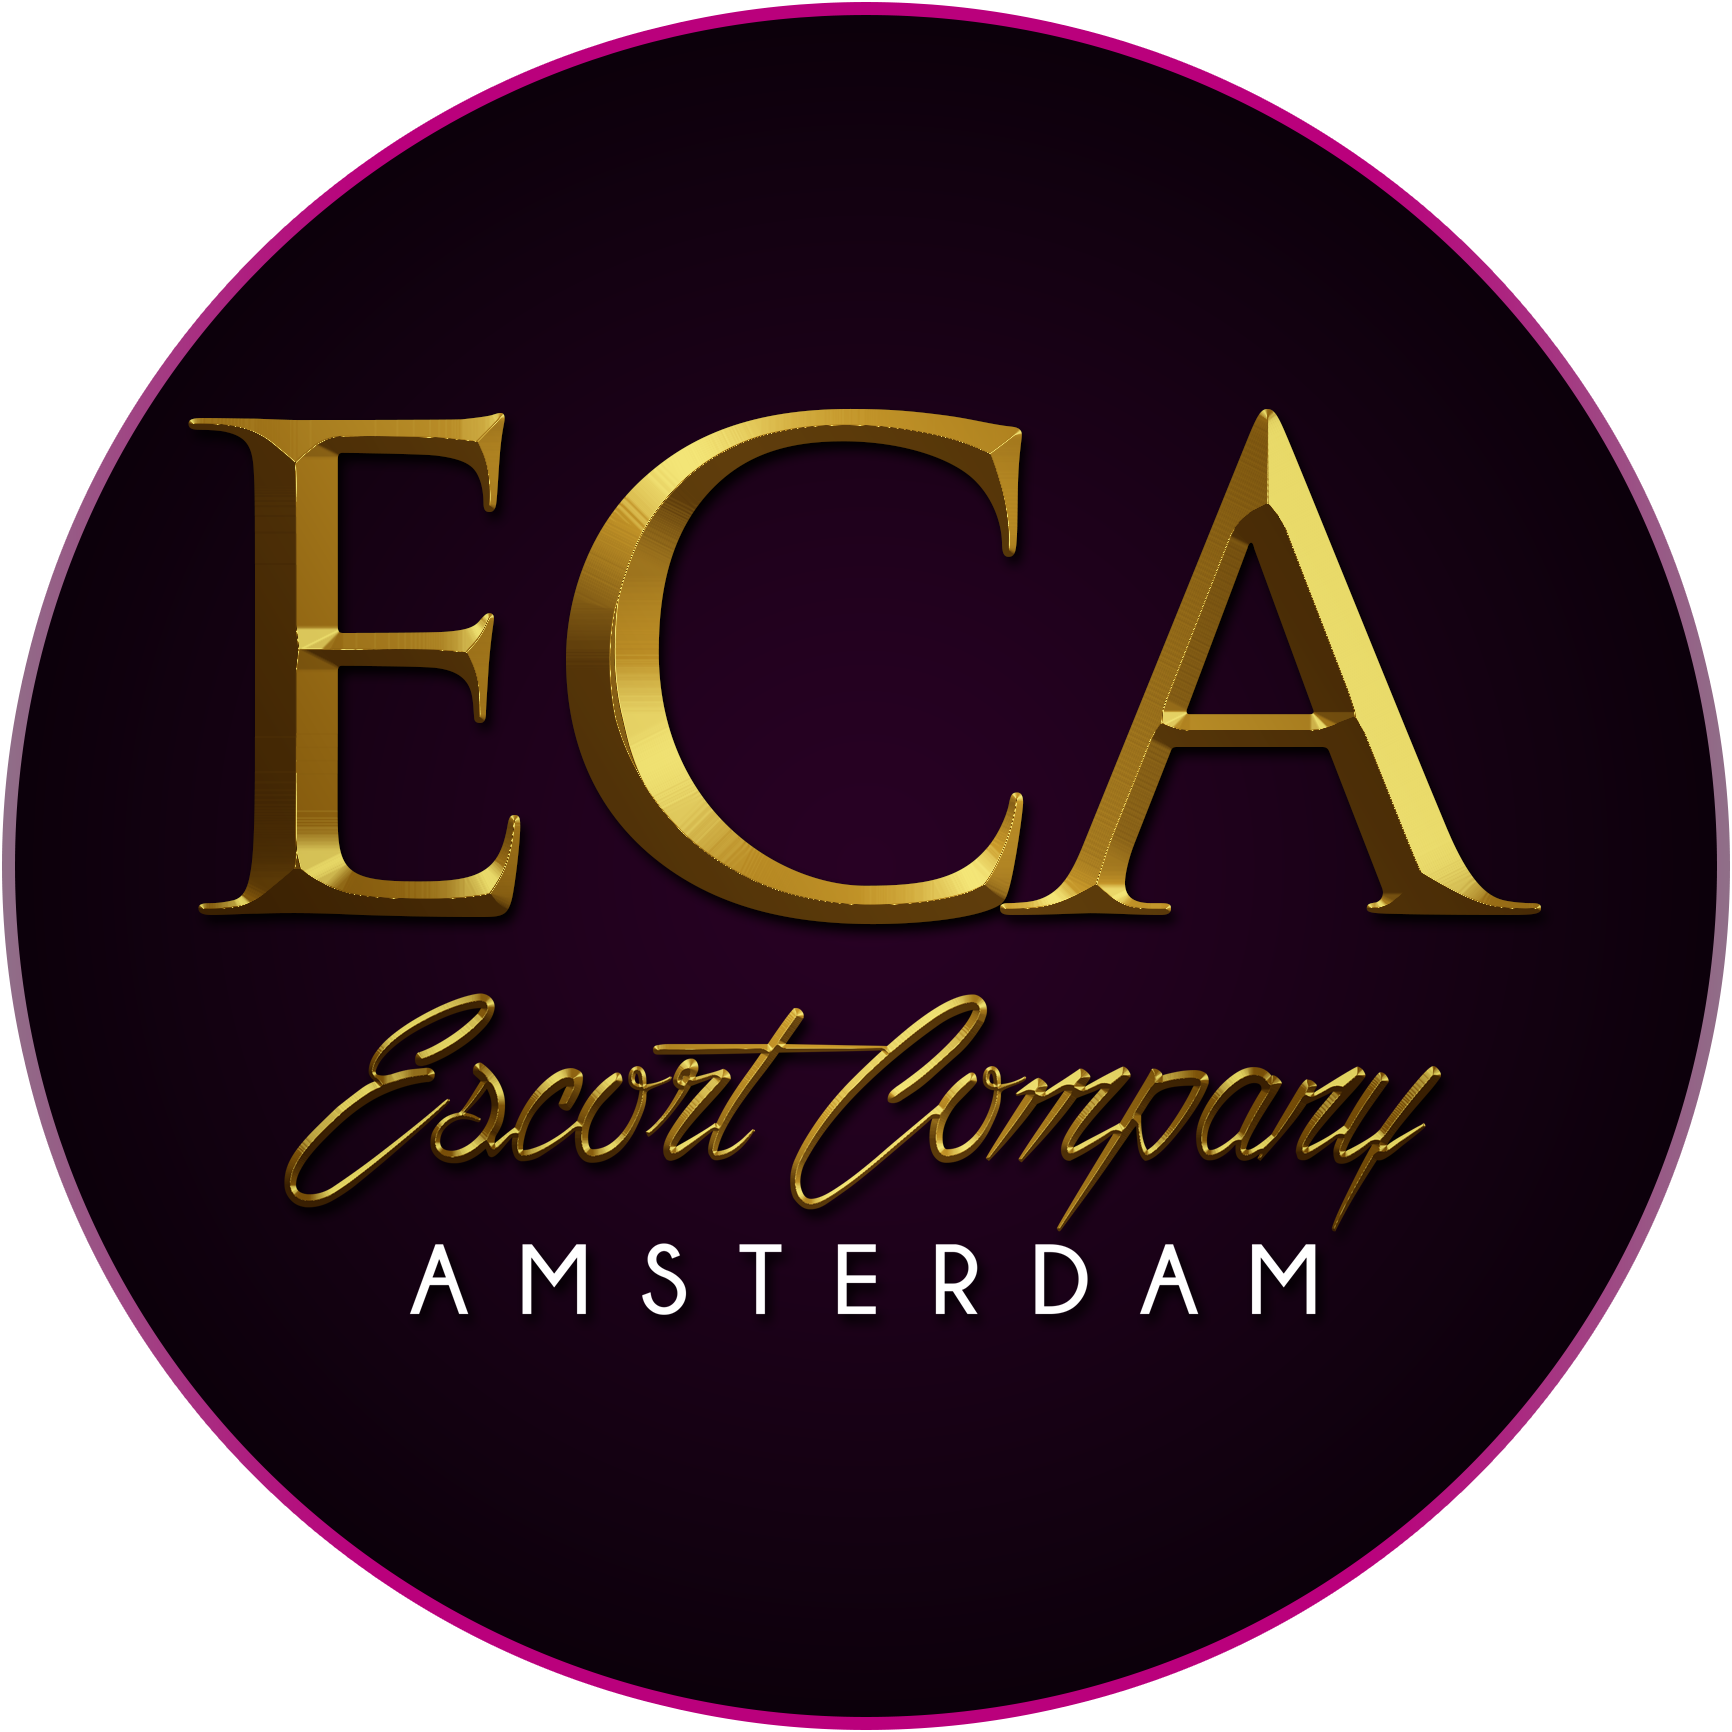 Elite Escort Company Amsterdam logo